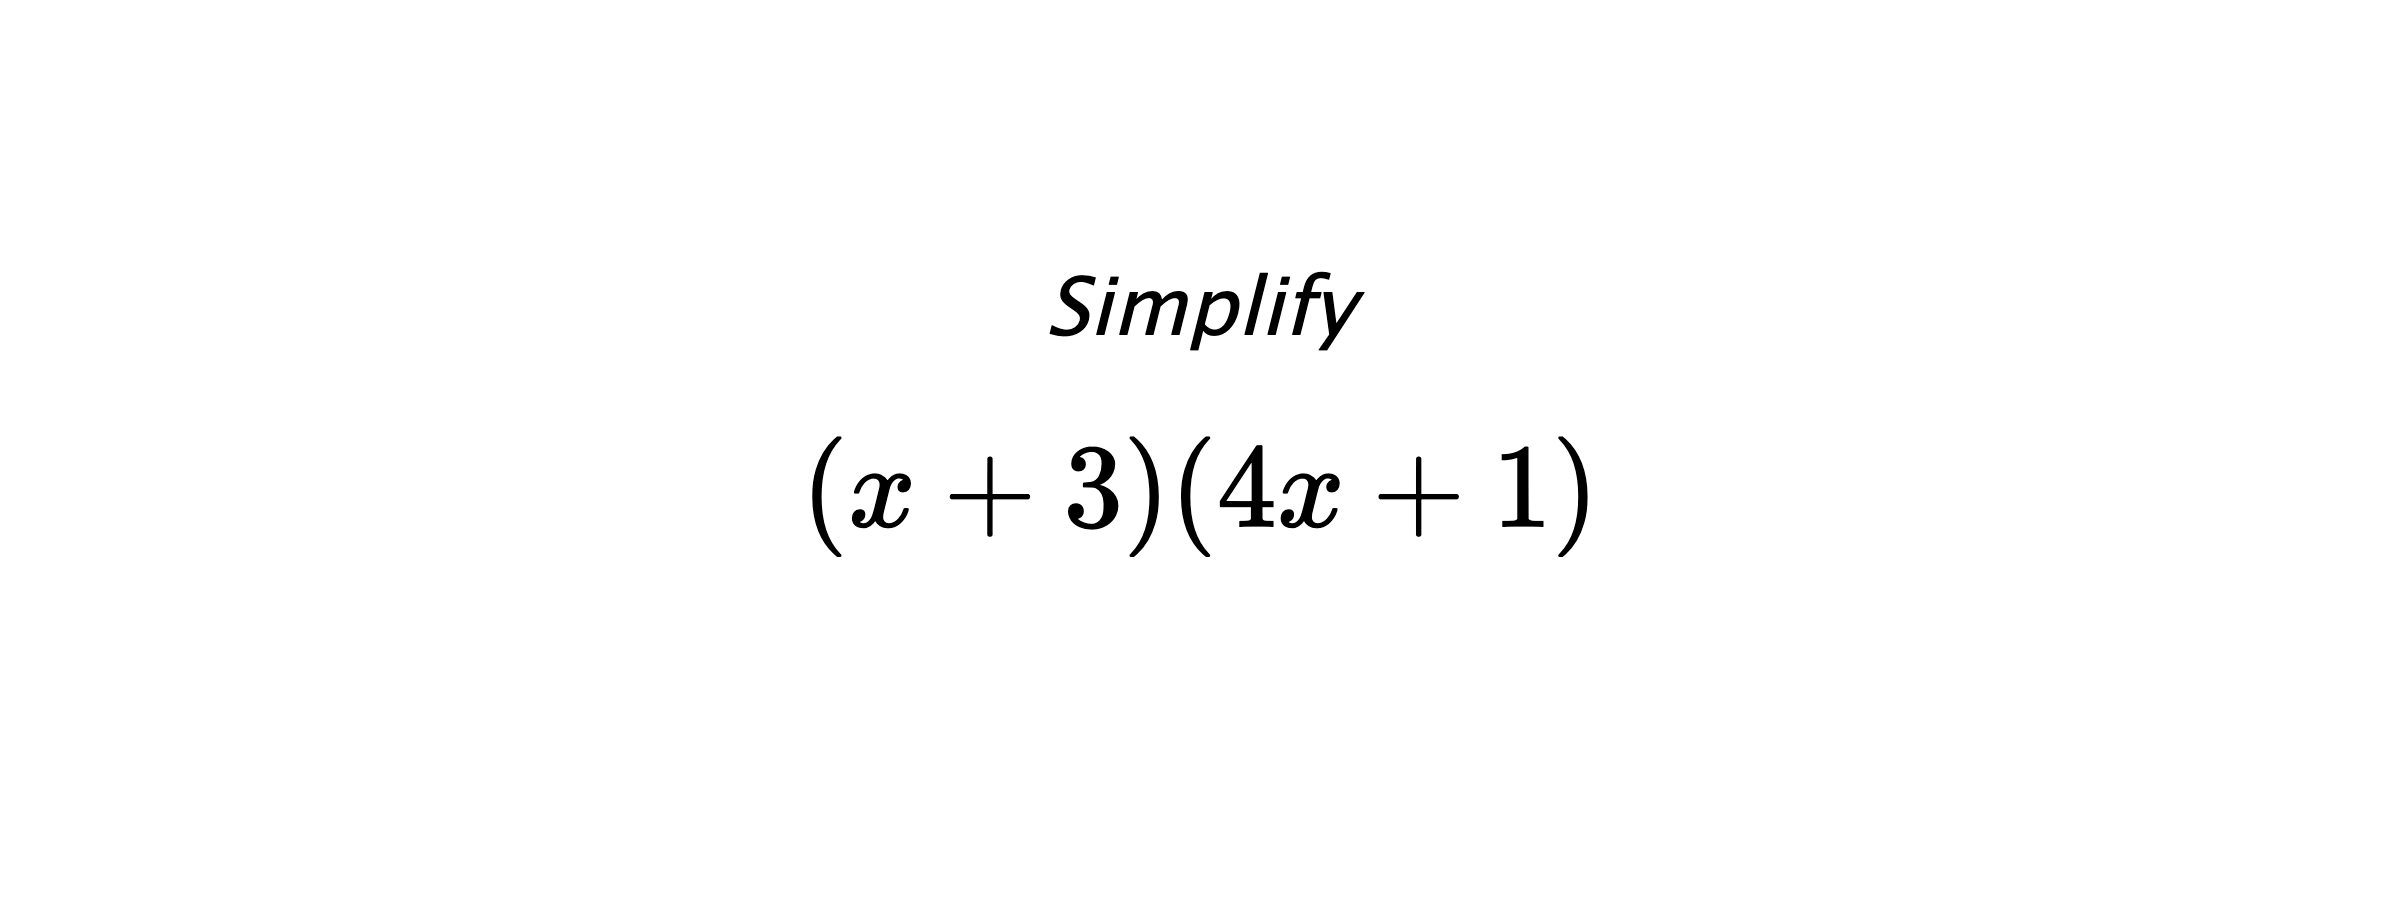 Simplify $$ \left(x+3) (4x+1\right) $$